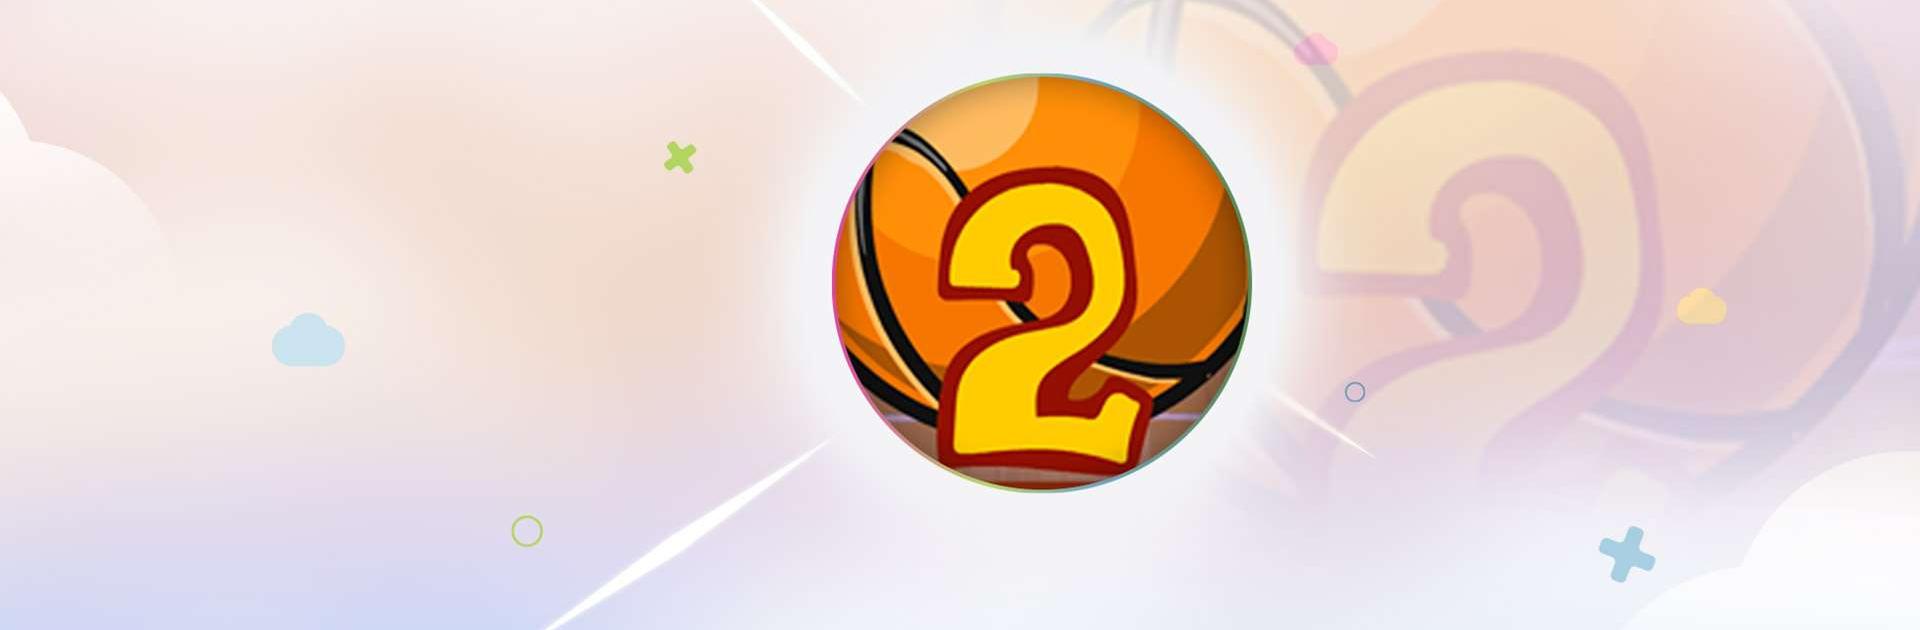 Play Basket Ball Master 2 Online